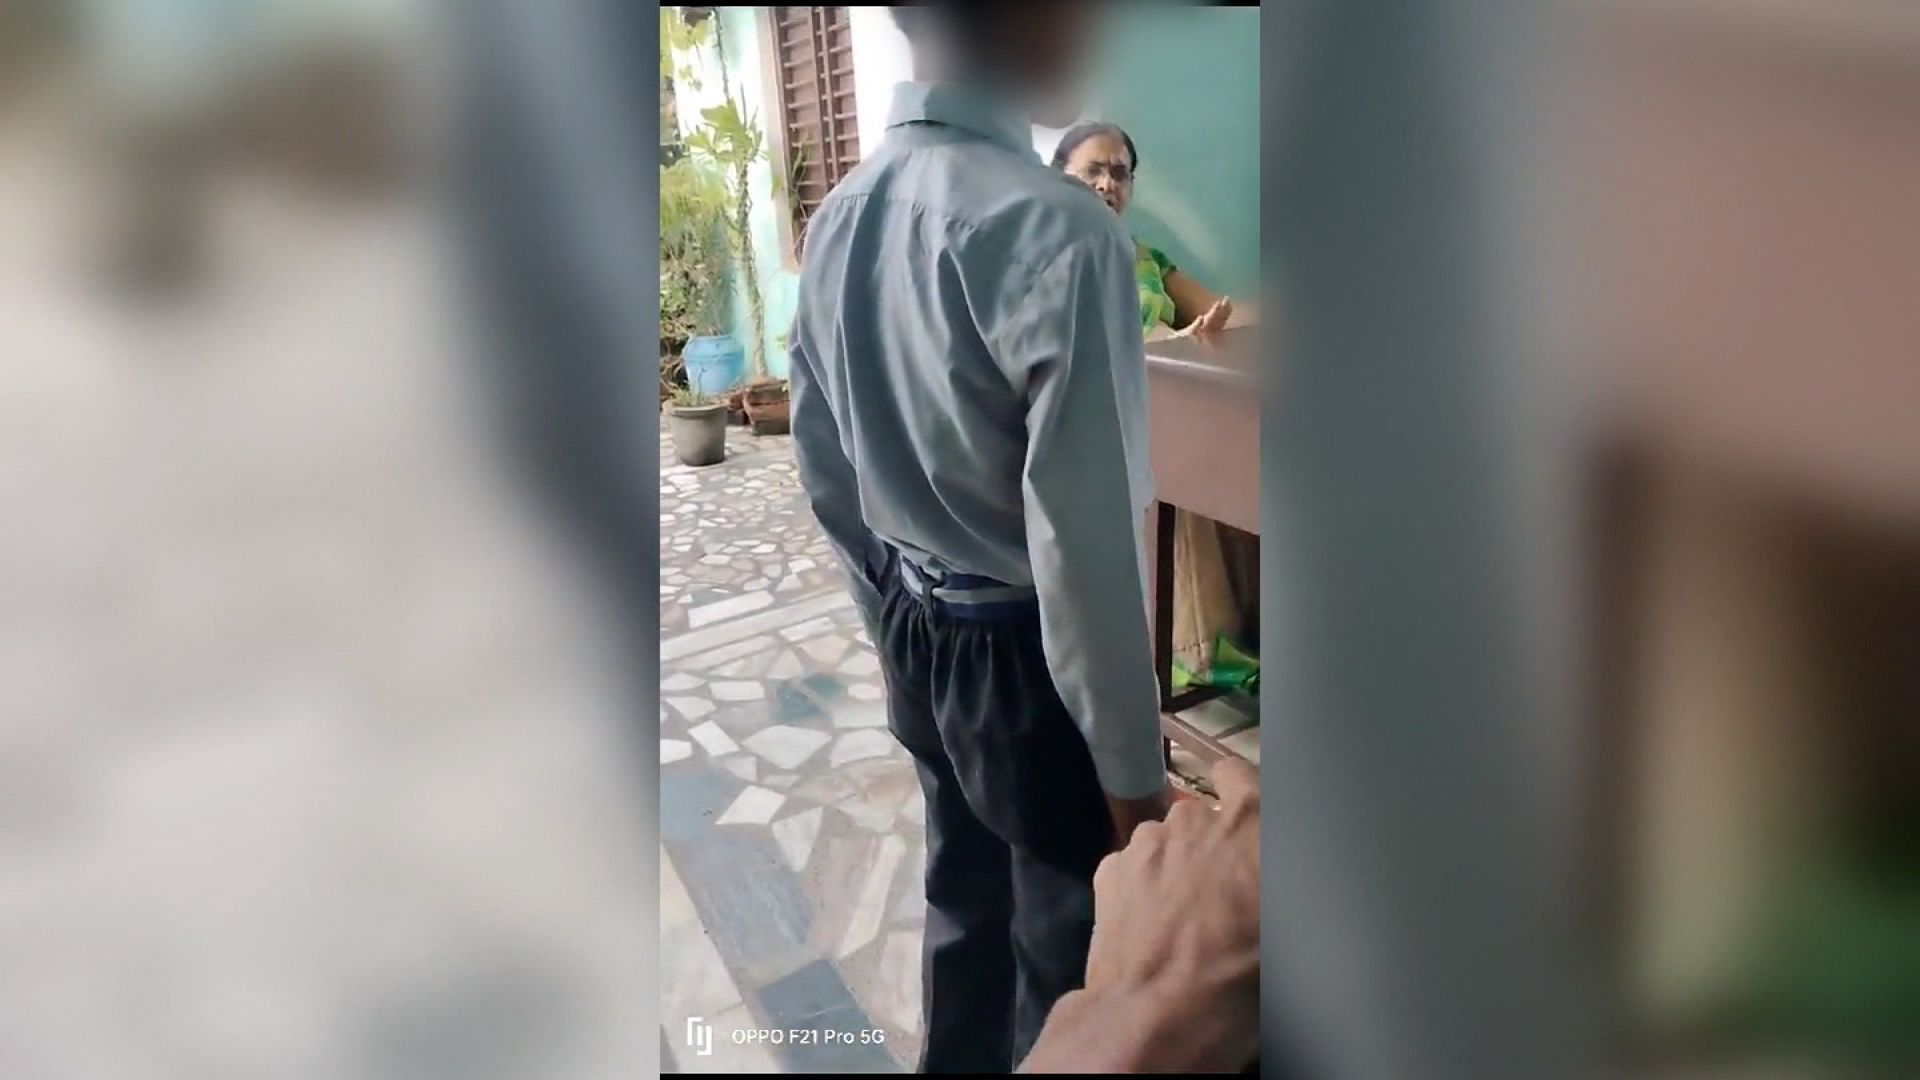 Tamil Muslim School Student Sex Video - Indian teacher asks students to slap classmate who is Muslim at Uttar  Pradesh school | CNN